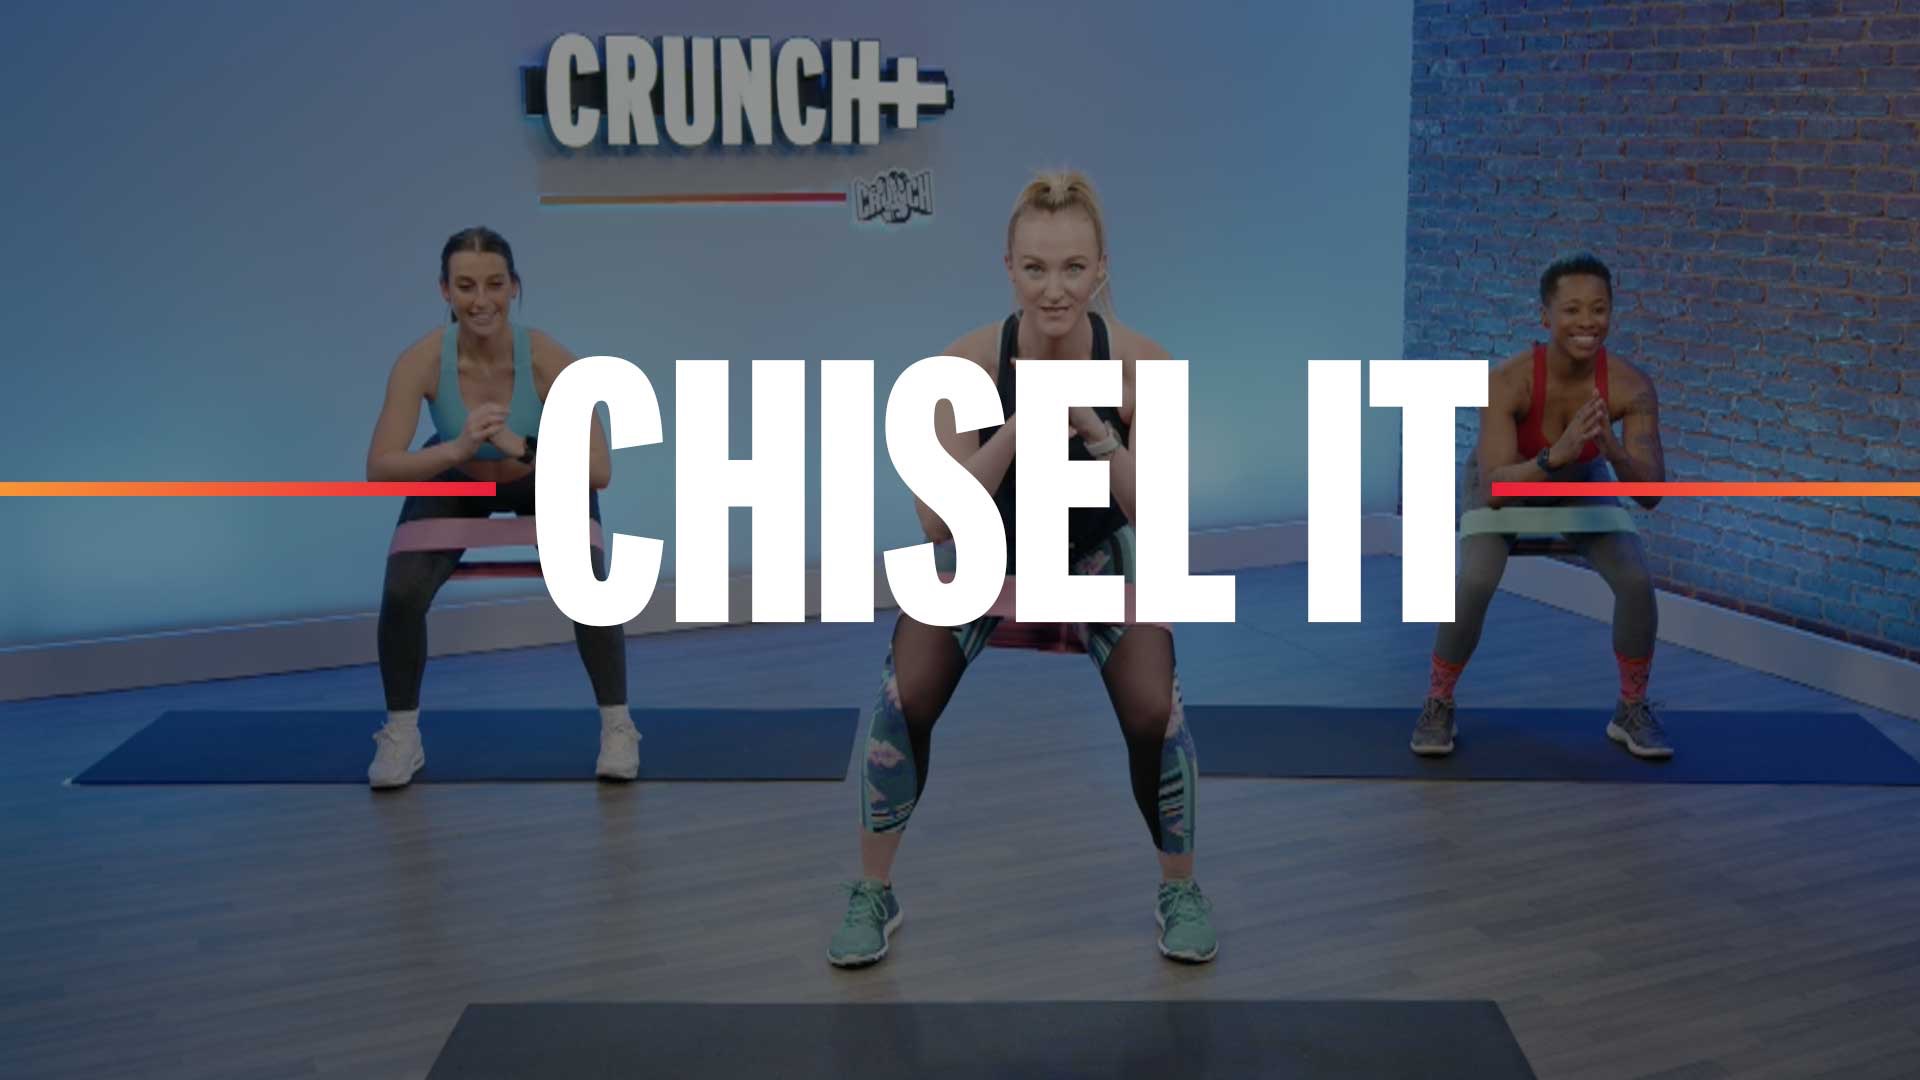 Chisel It by Crunch+